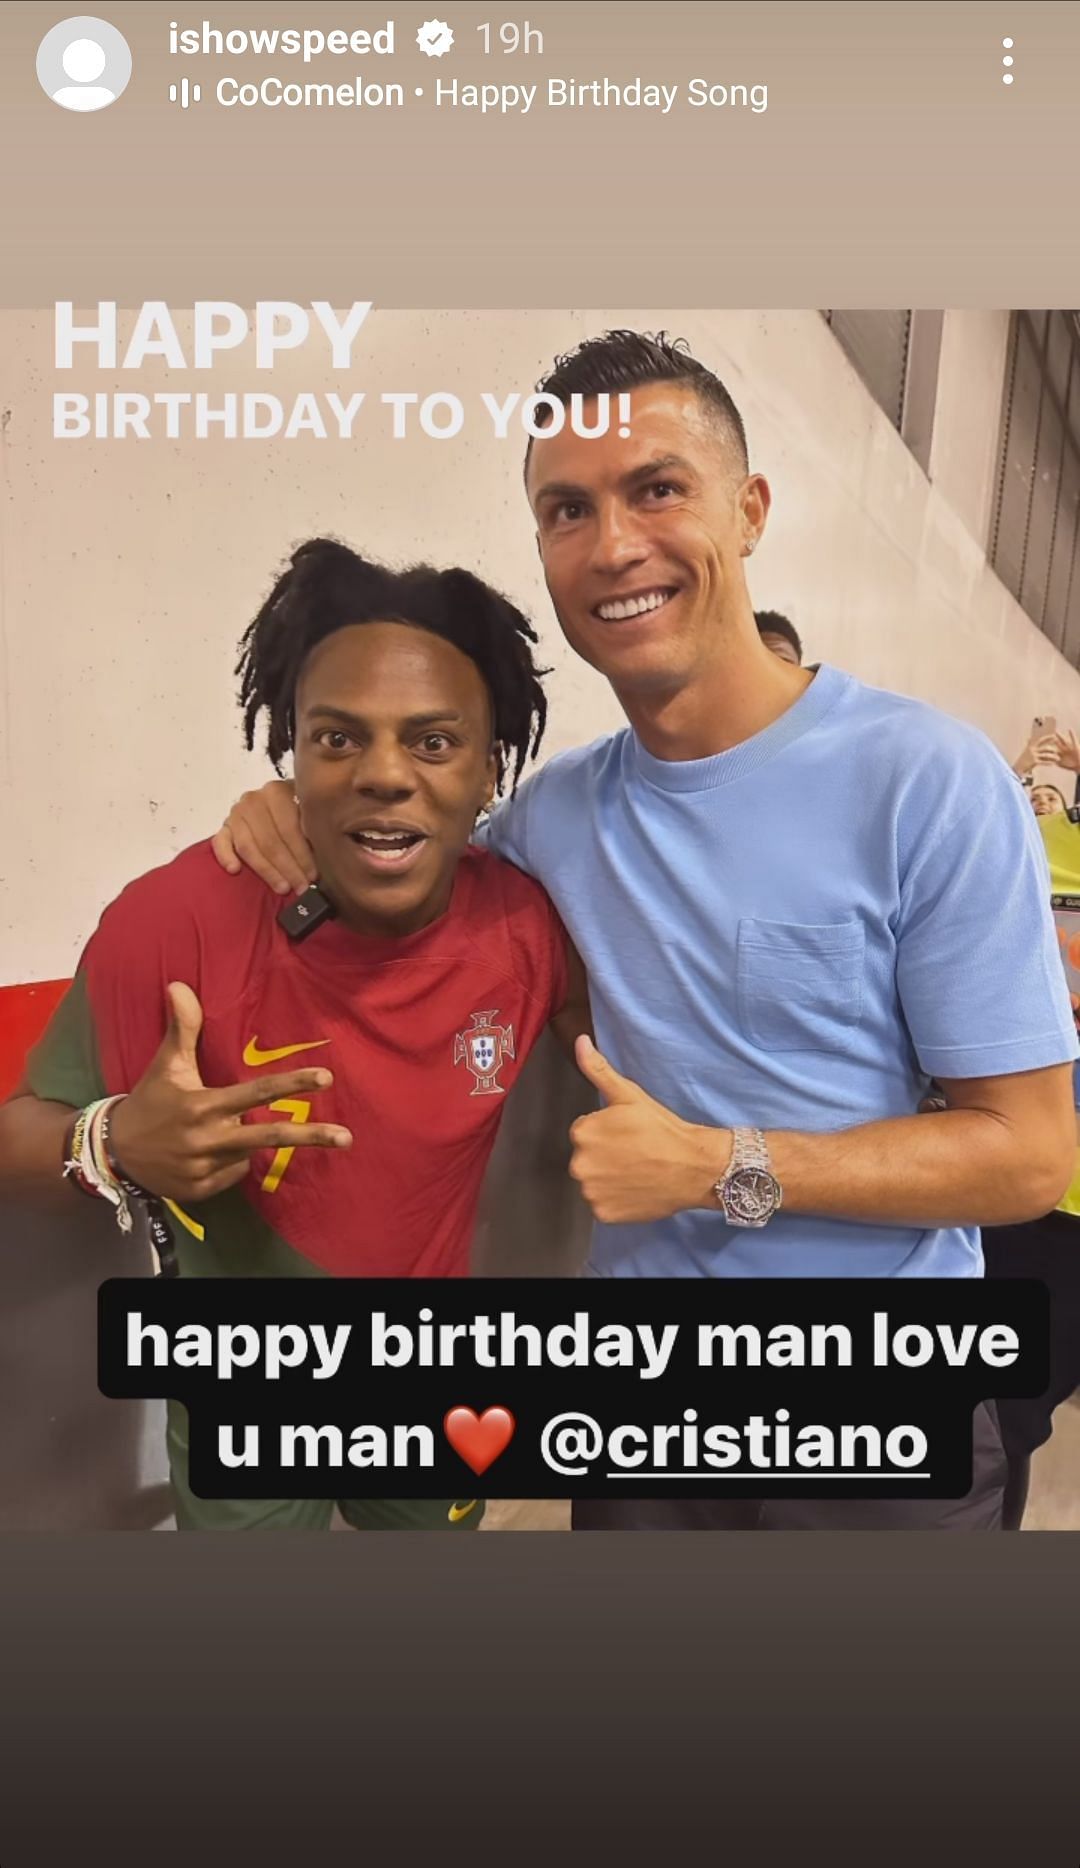 IShowSpeed wishes Cristiano Ronaldo on his birthday